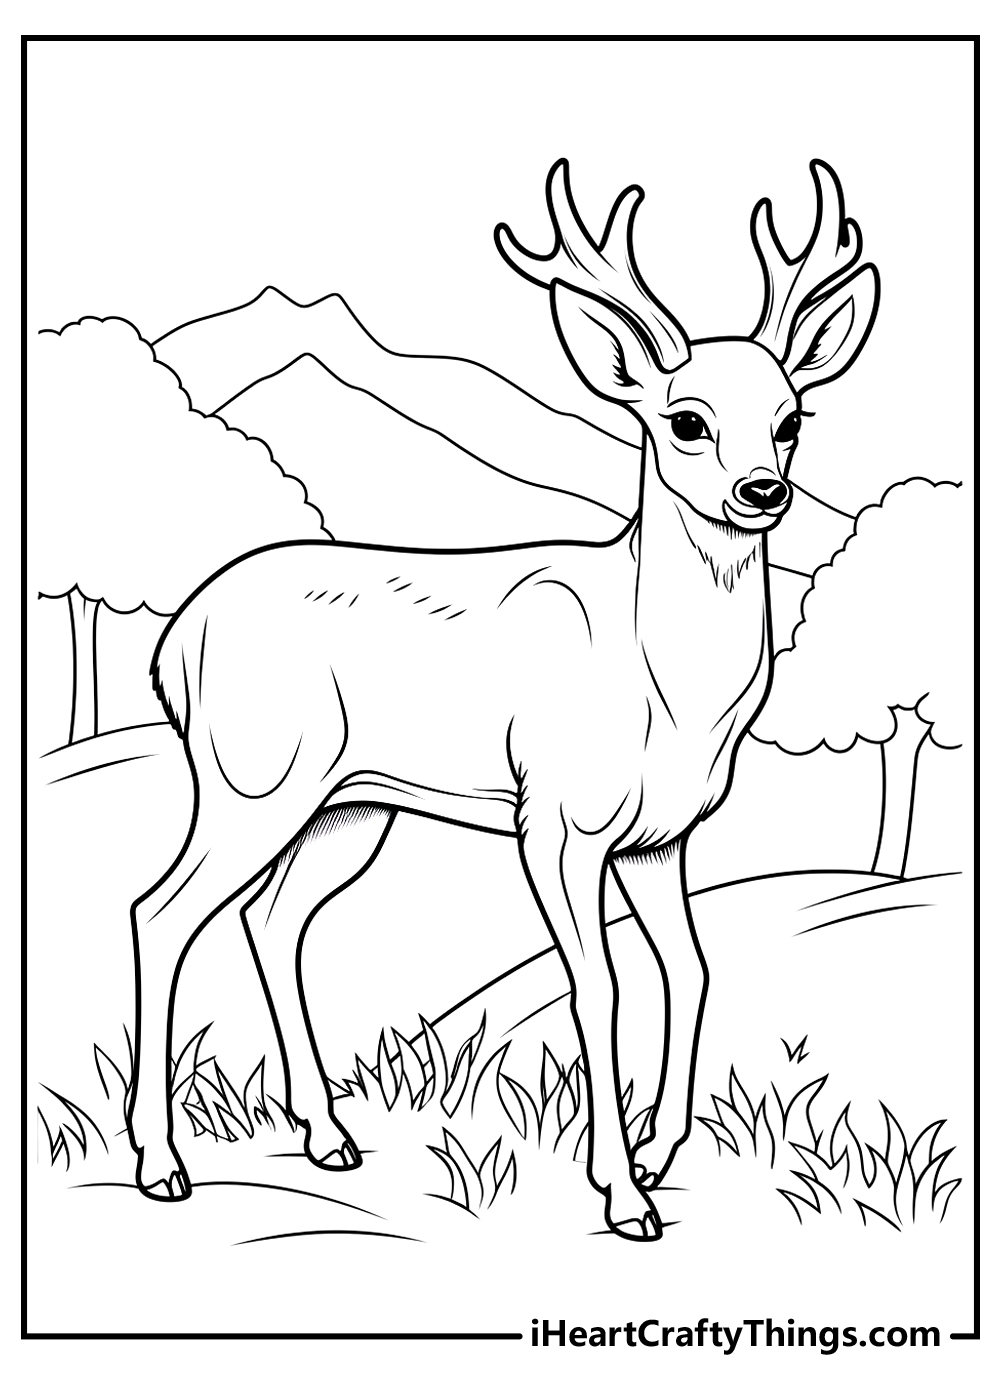 Deer Coloring Pages for Kids, Girls, Boys, Teens Birthday School